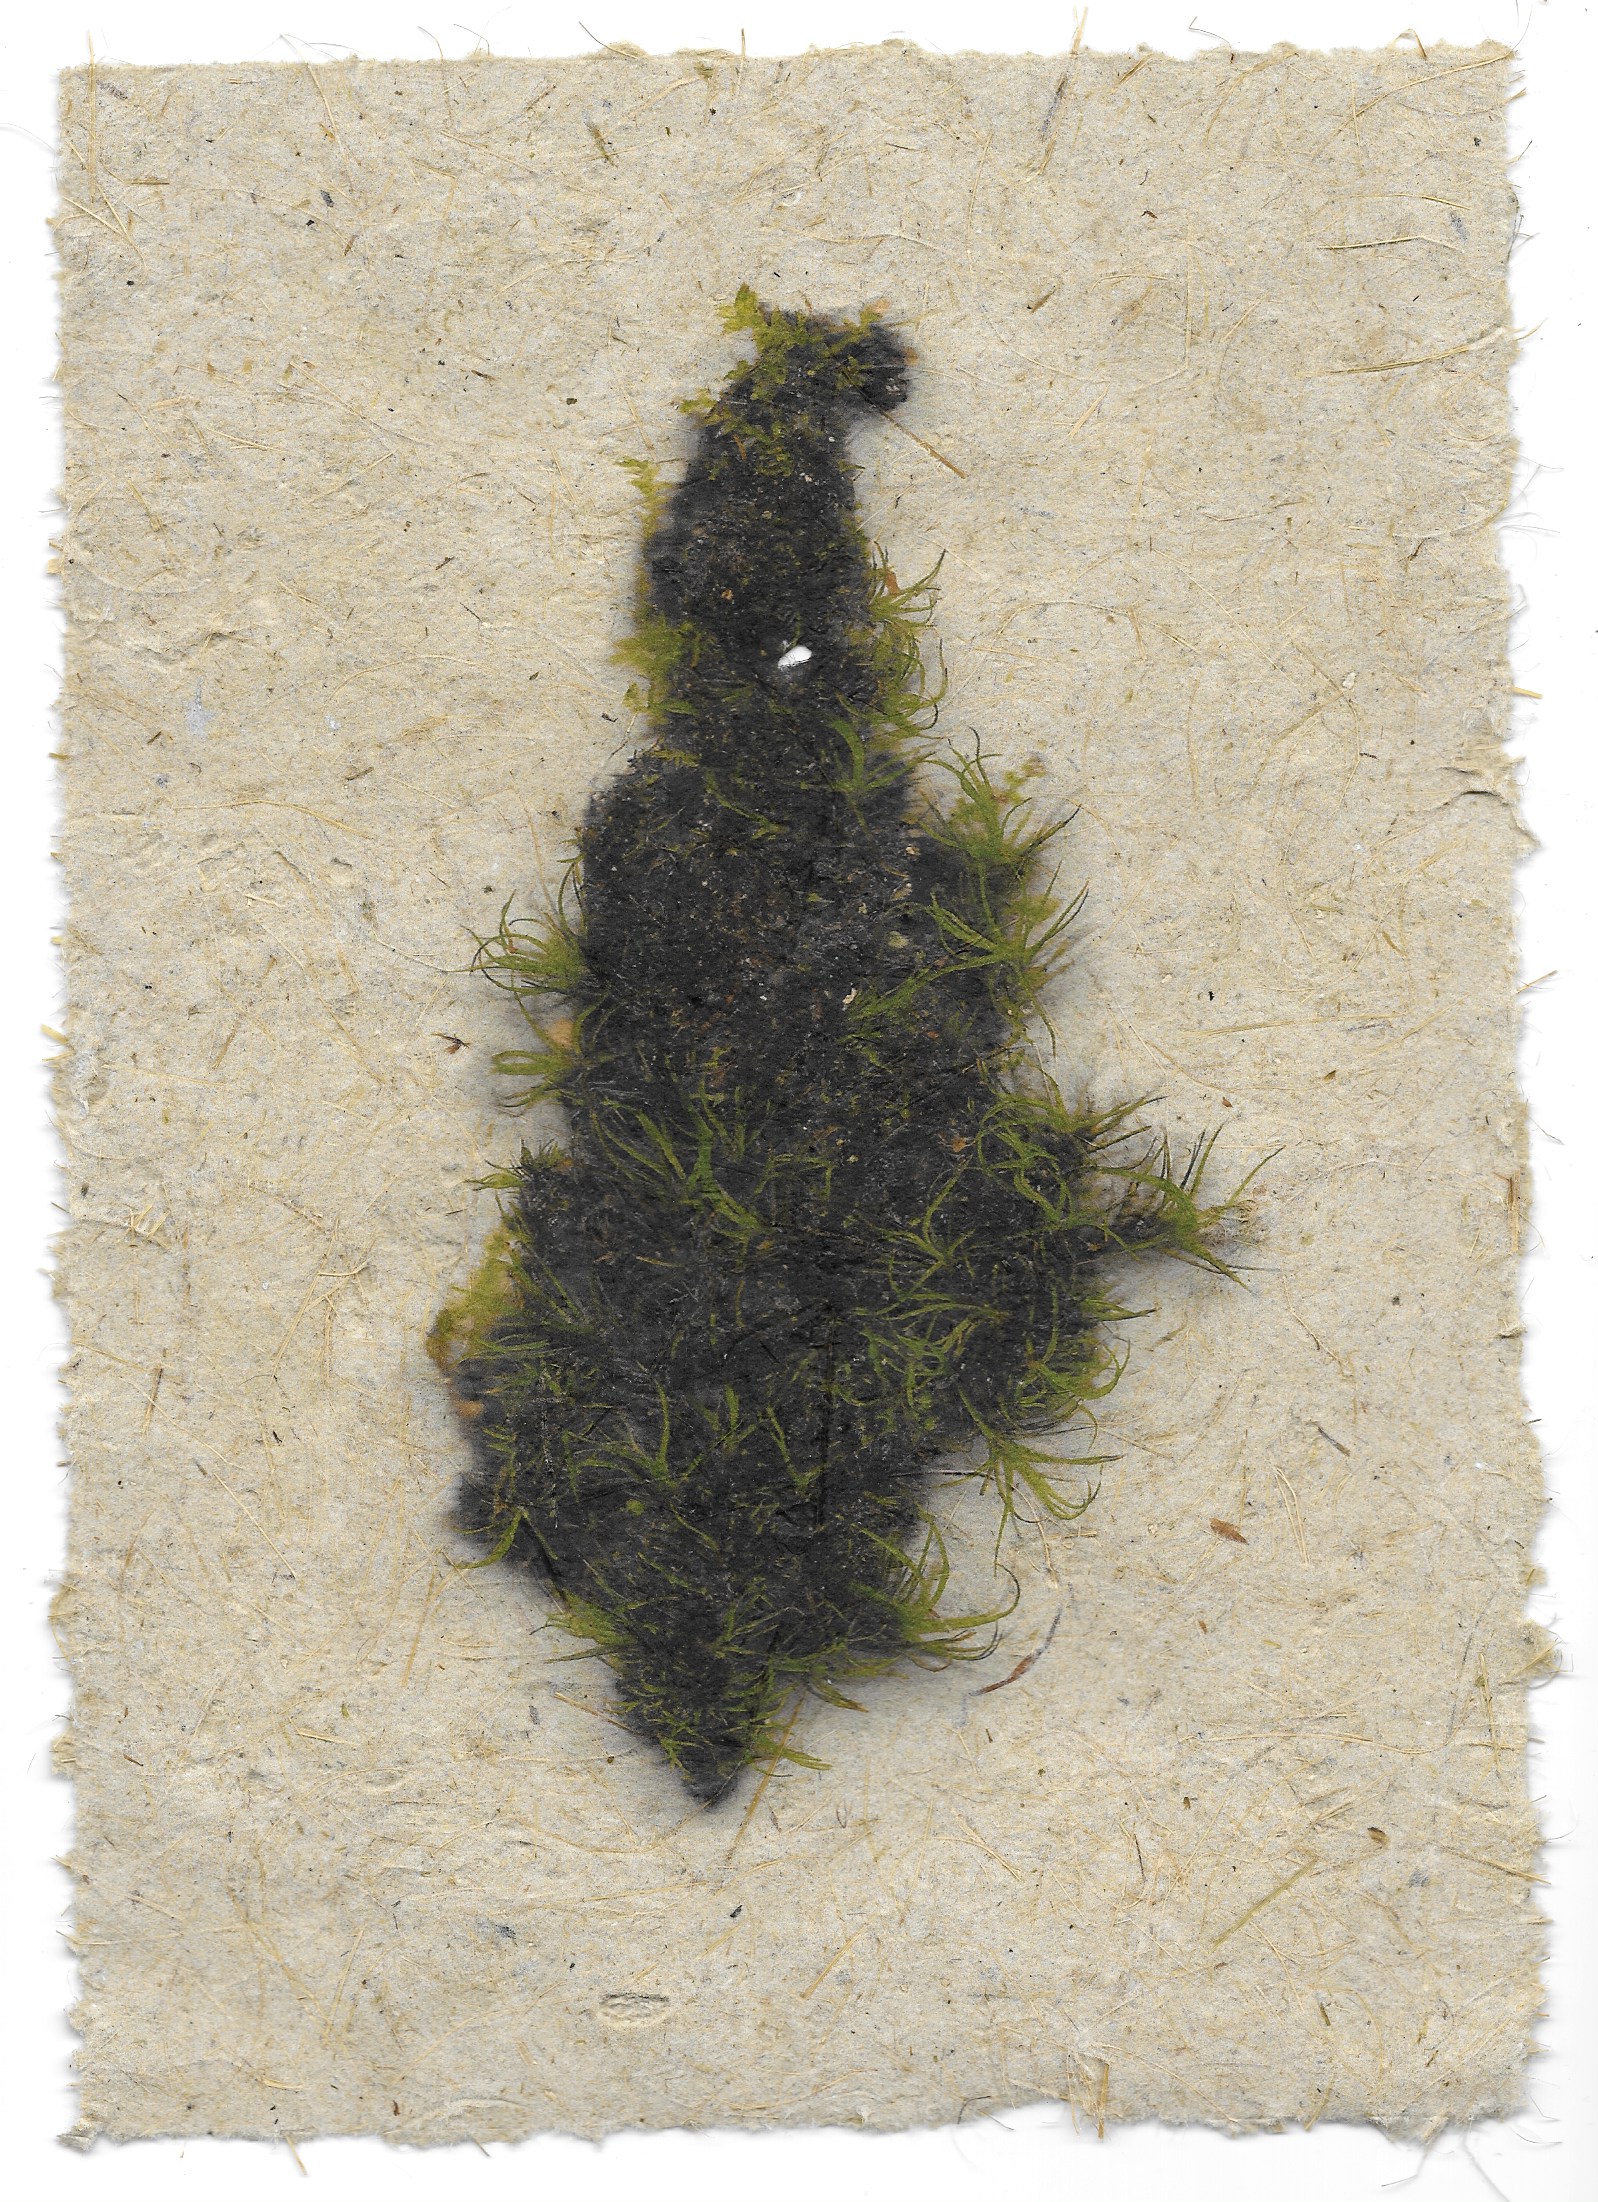 moss specimen #2